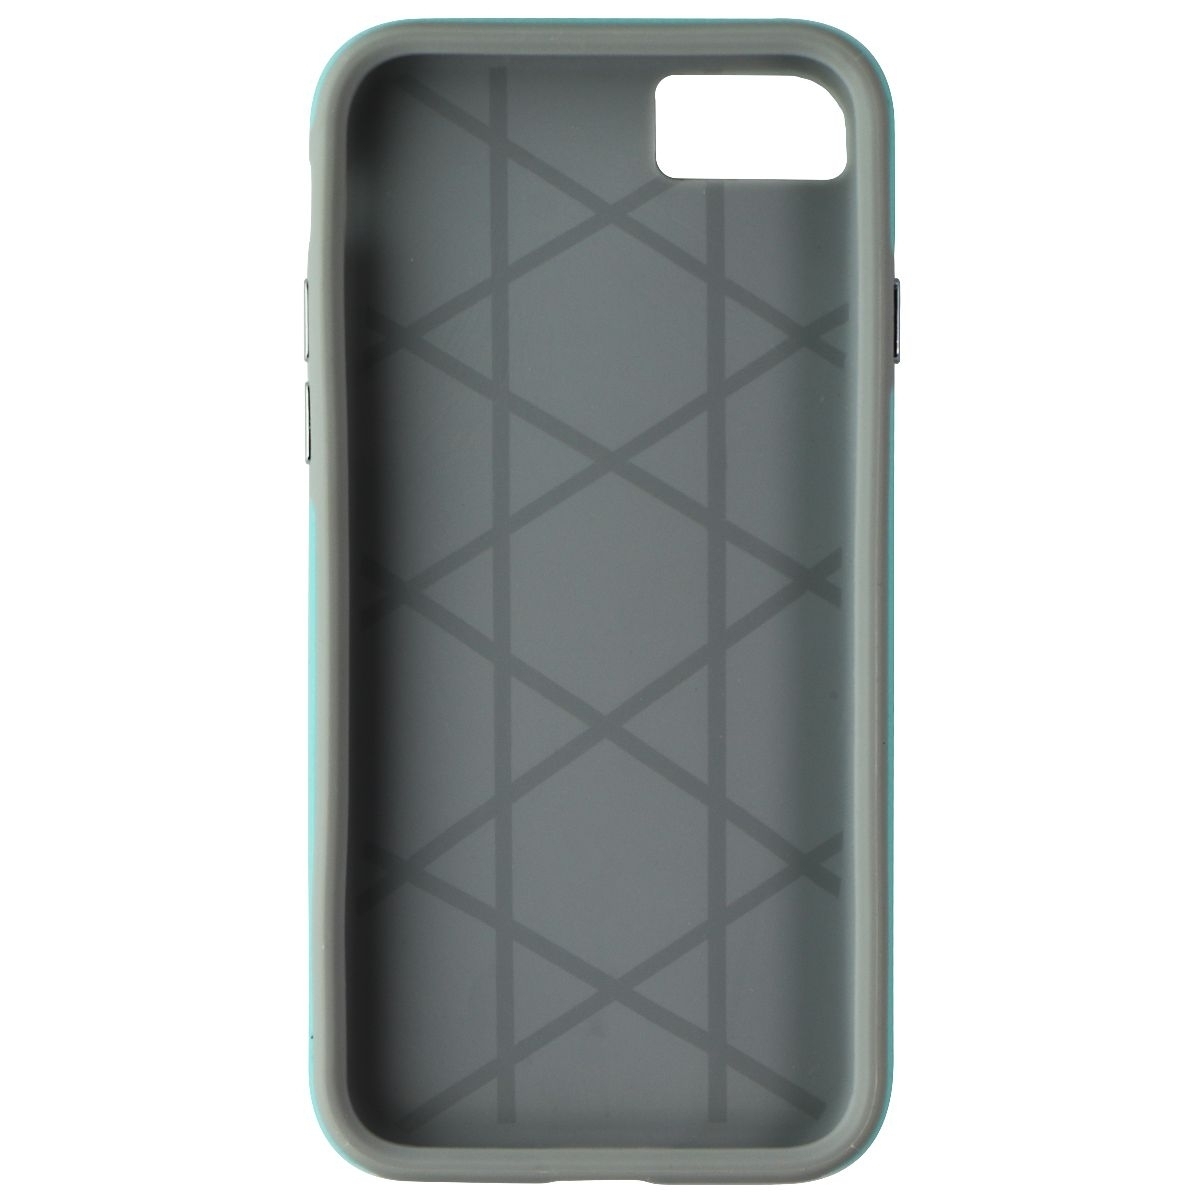 Nimbus9 Latitude Series Hard Case For Apple IPhone 8/7 - Teal/Gray (Refurbished)